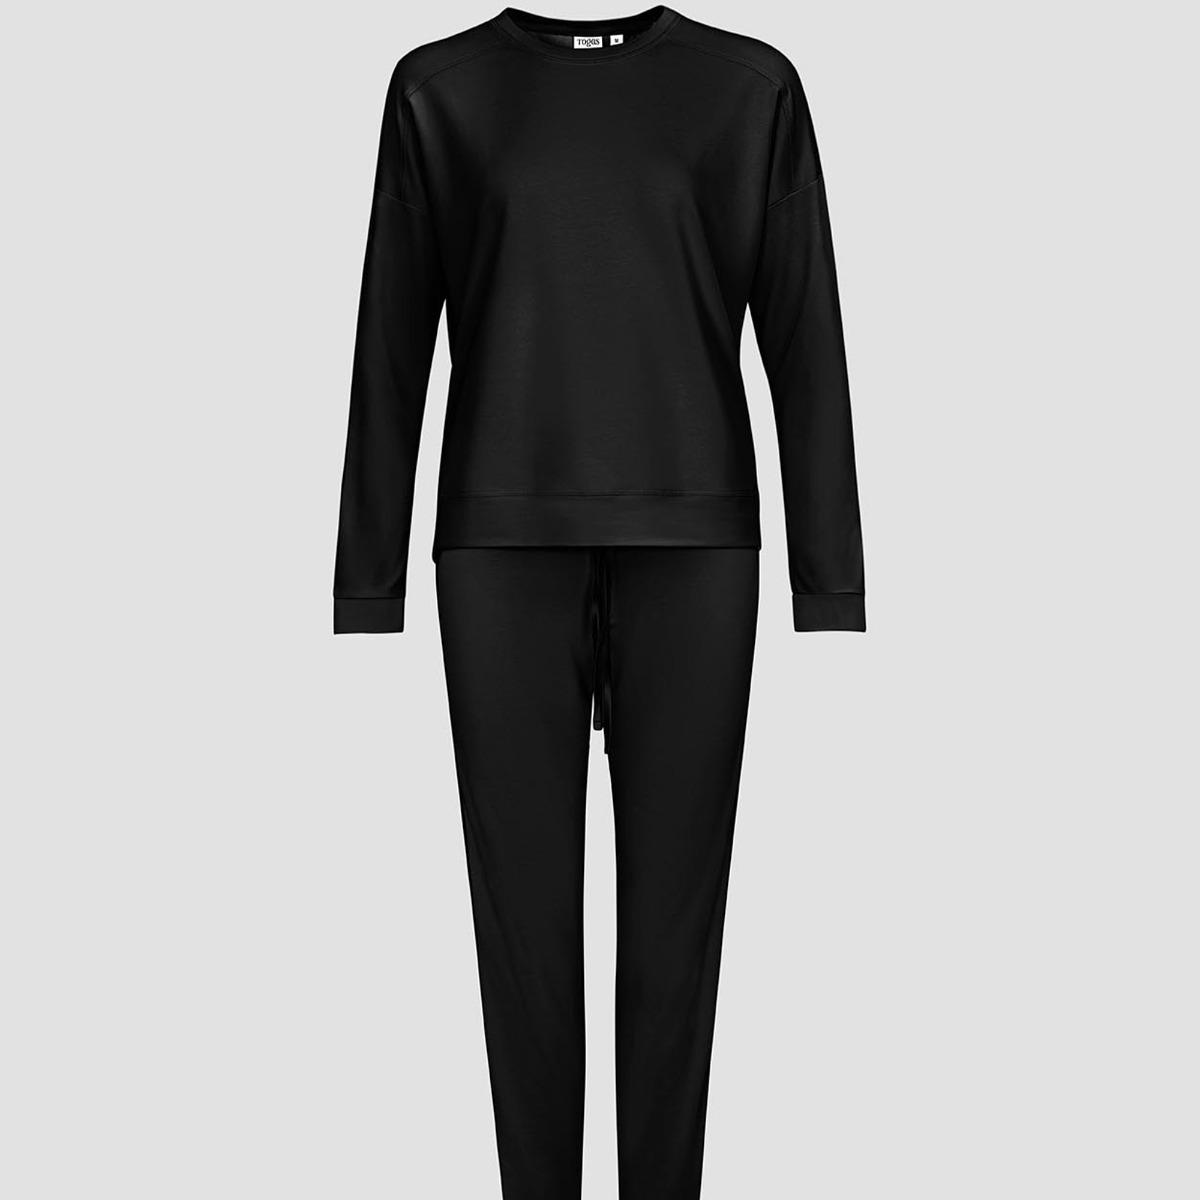 женская пижама togas рене чёрная xl 50 Женская пижама Togas Рене чёрная XL (50)